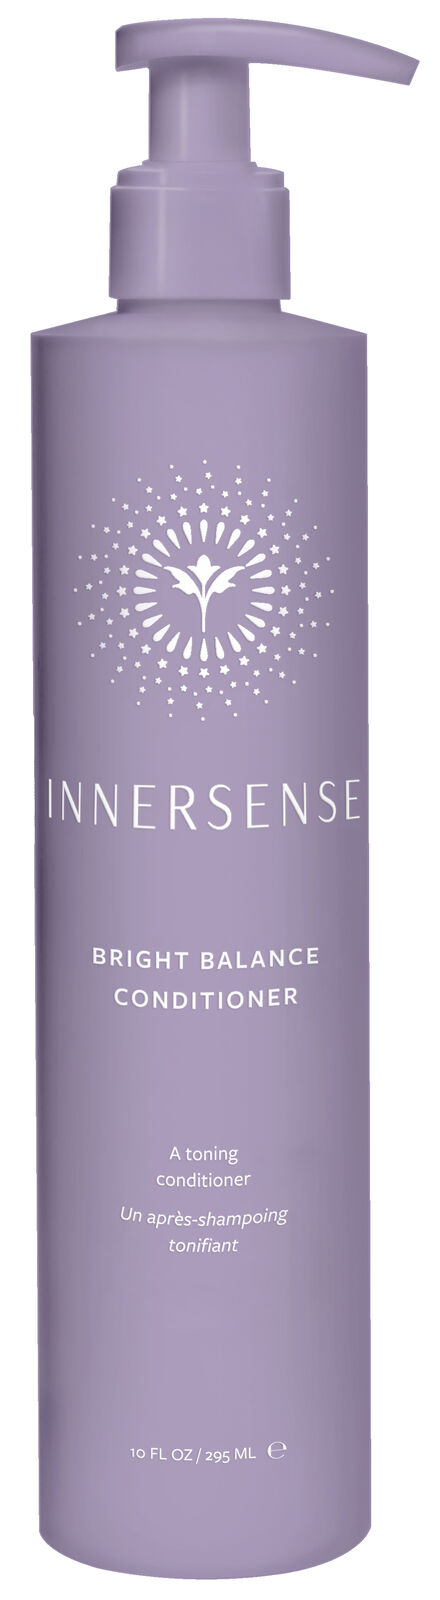 Innersense Bright Balance Conditioner 295ml